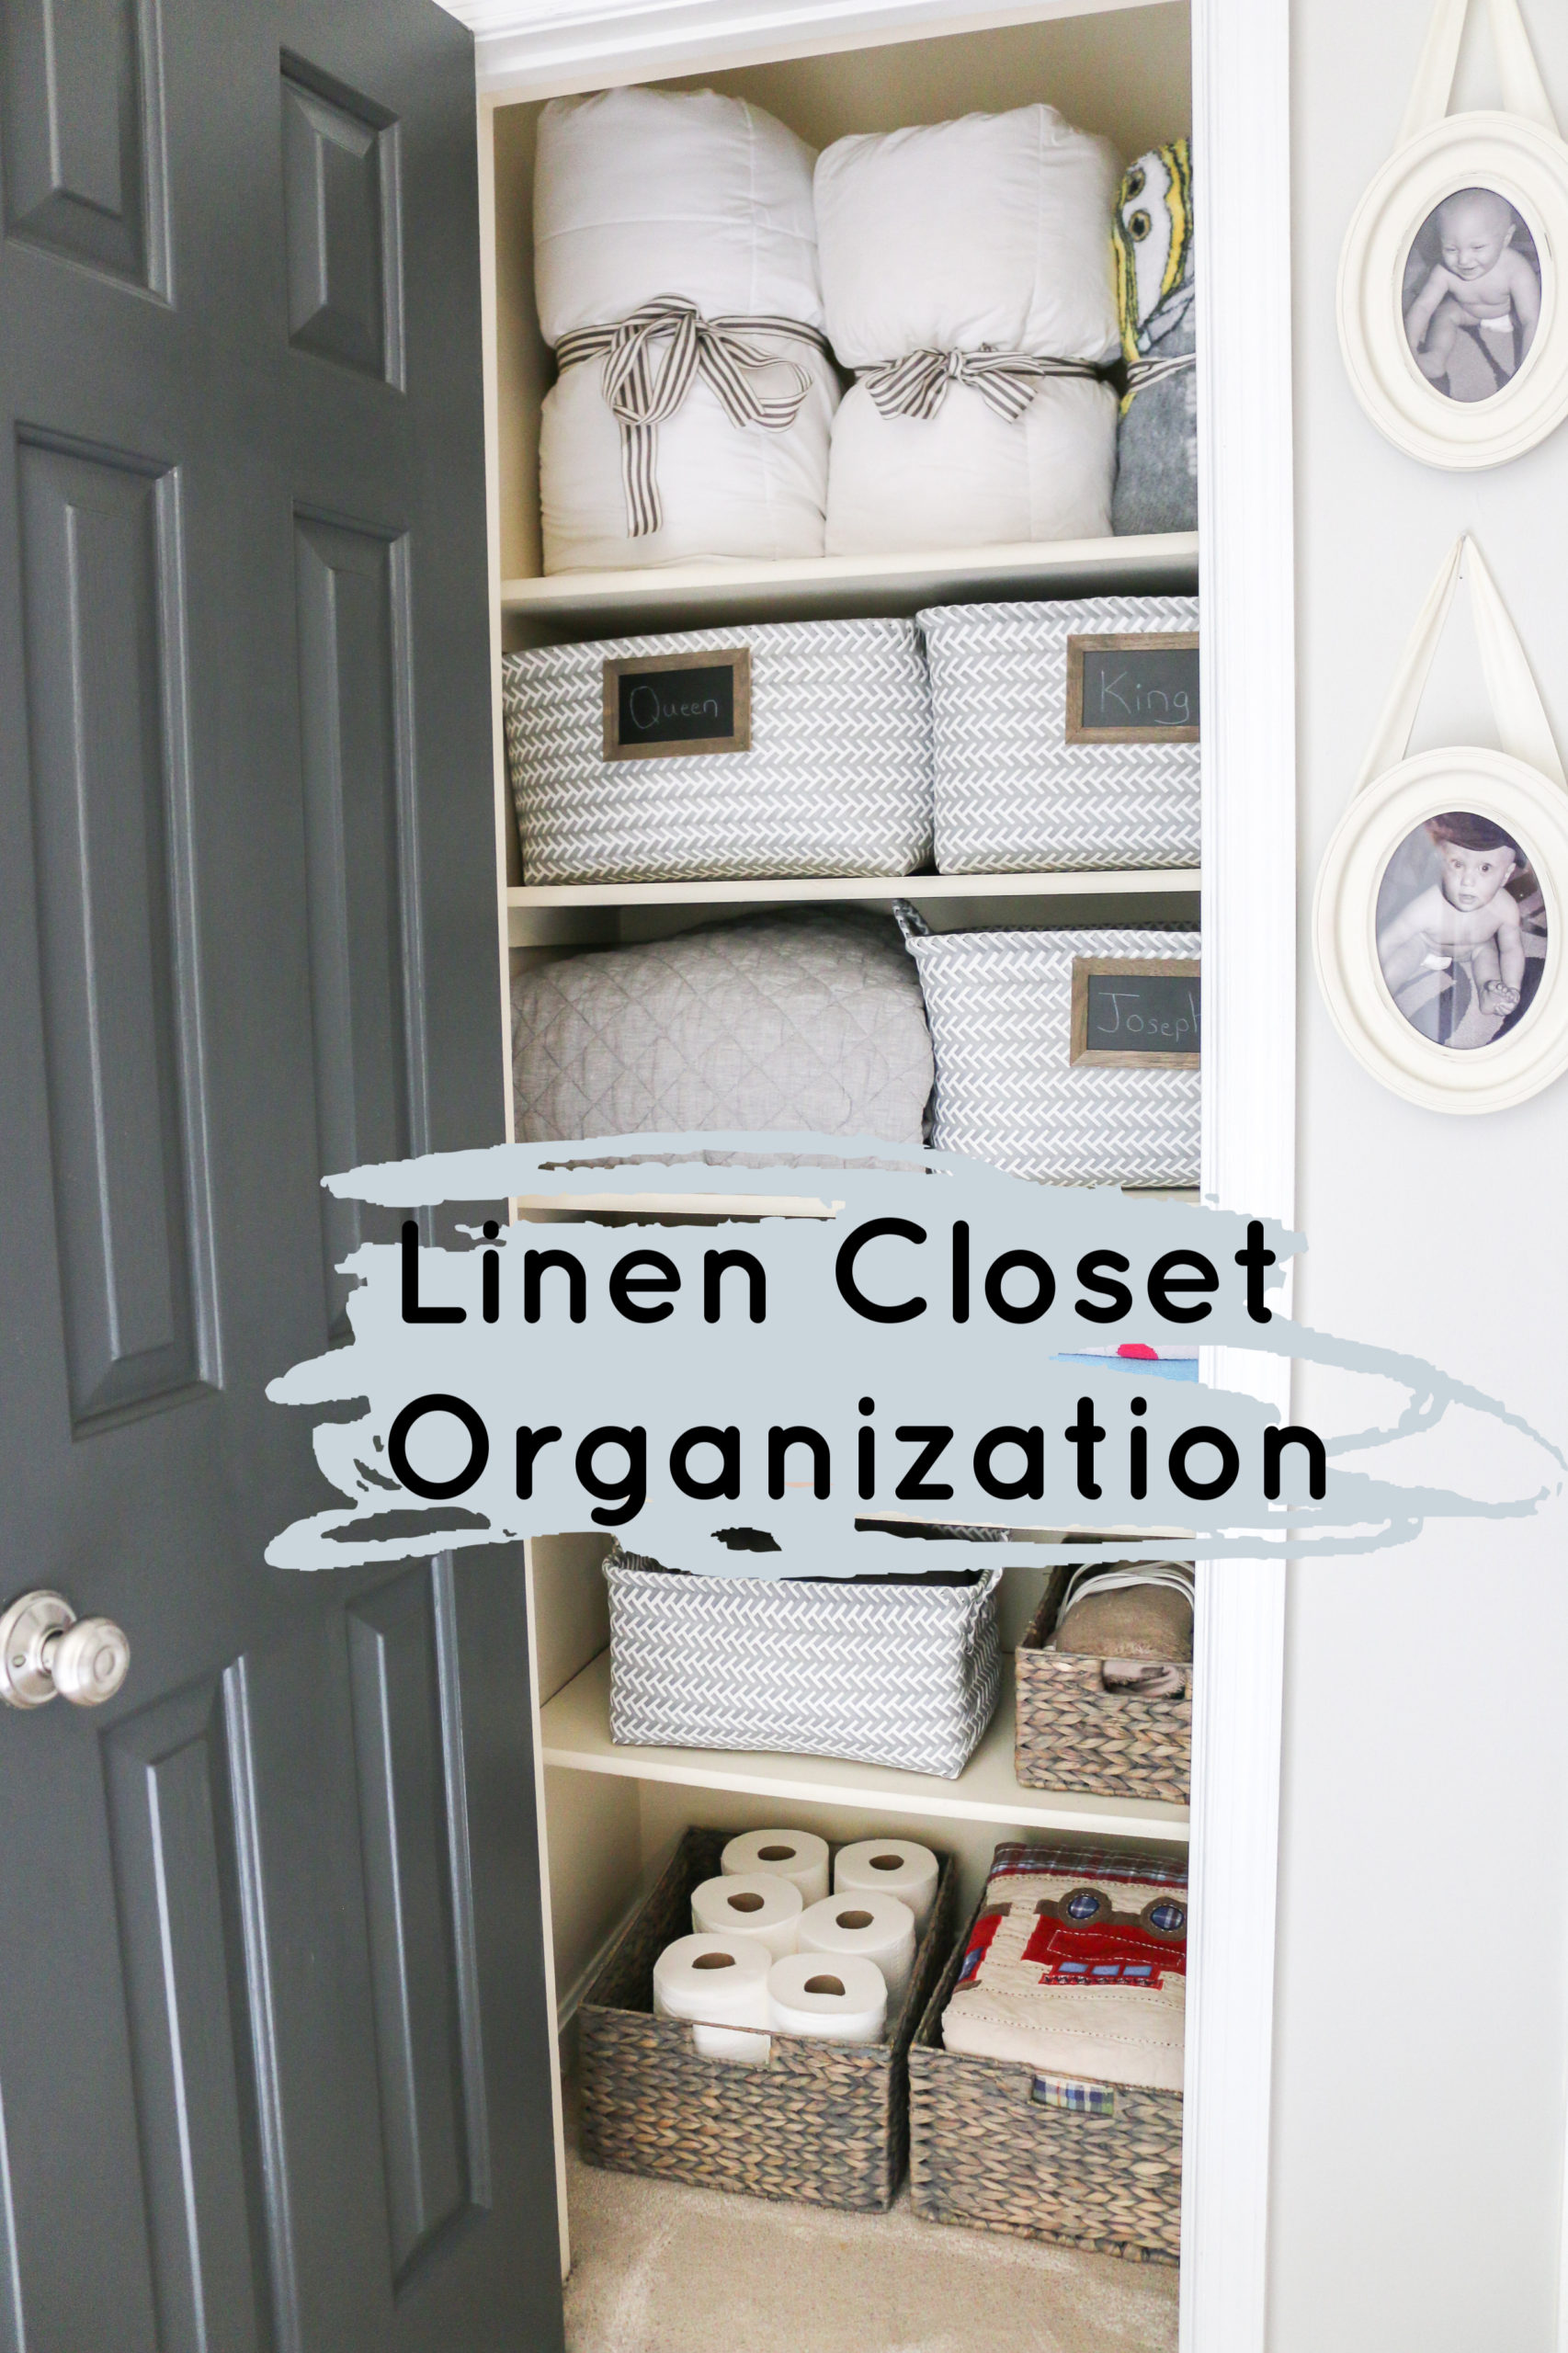 Linen Closet Organization (Small Projects Series)